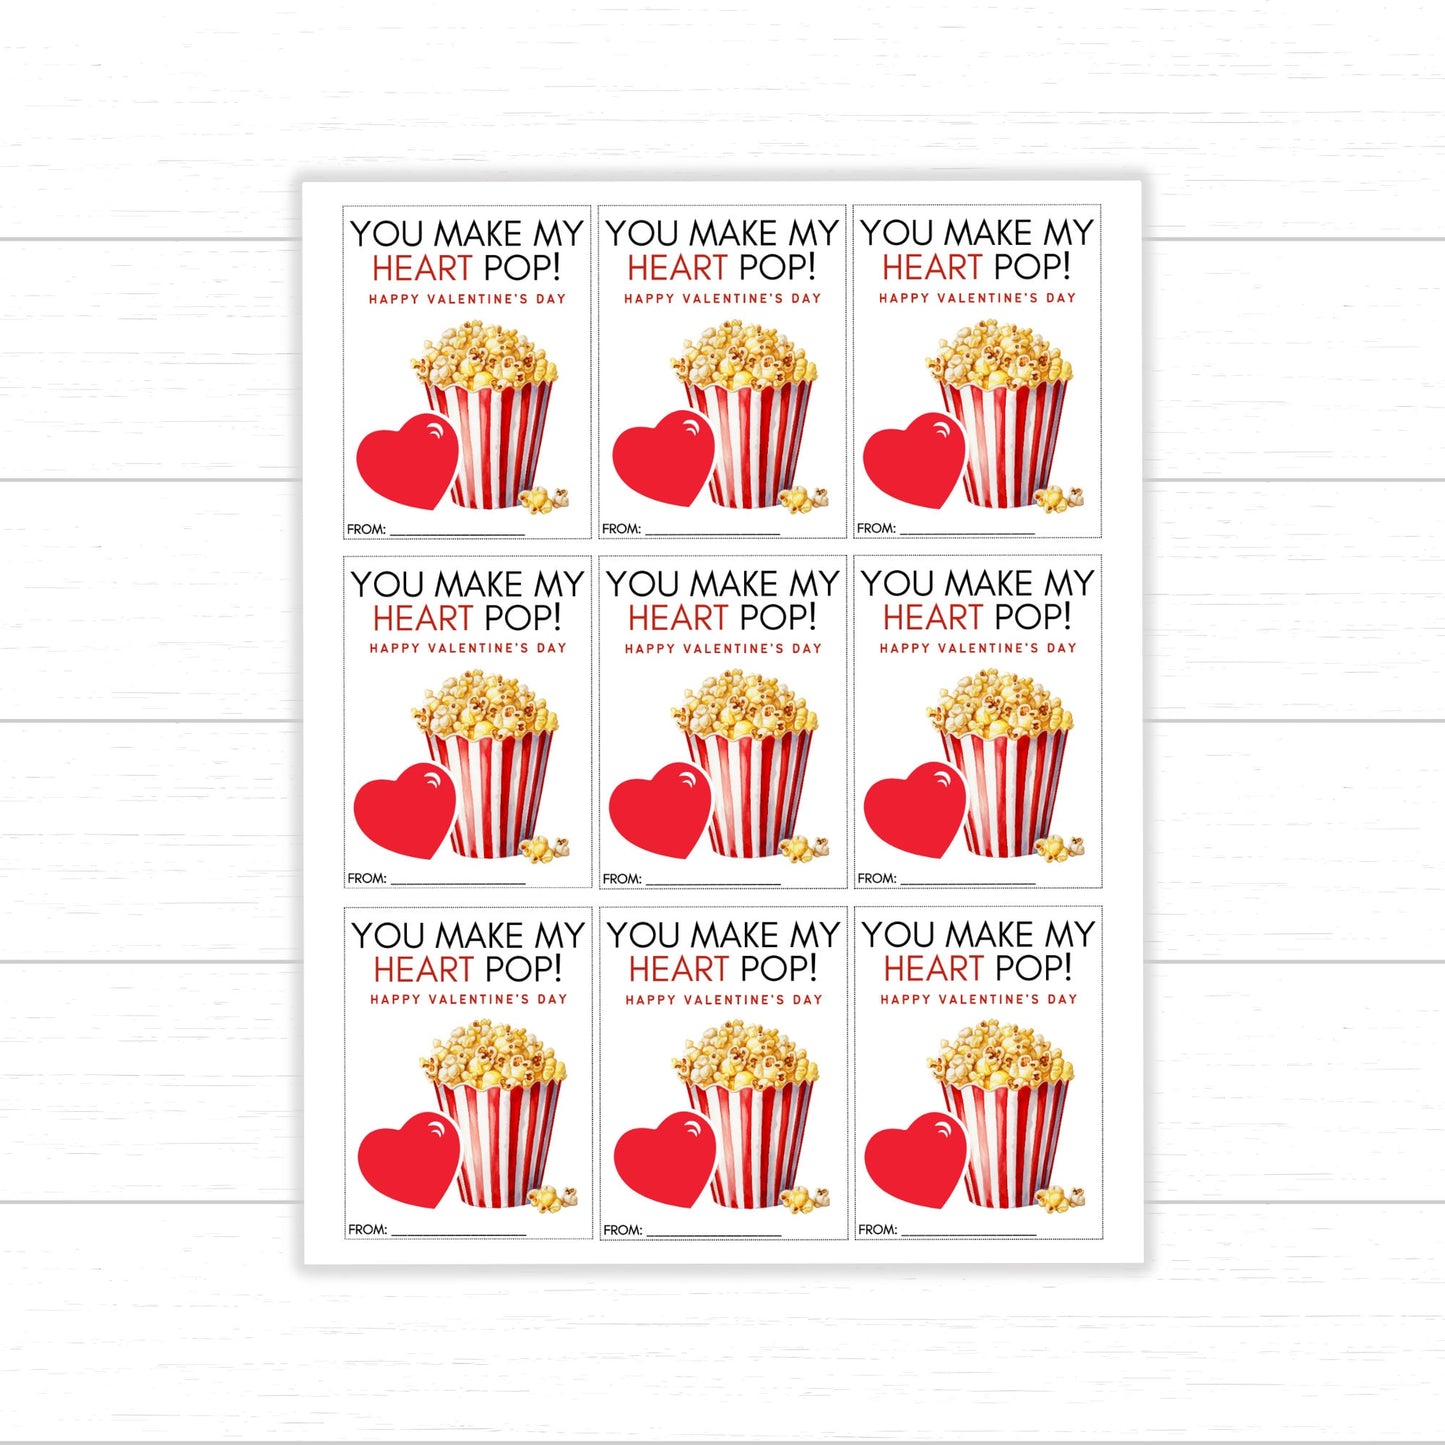 Popcorn Valentine's Day Cards, You Make My Heart Pop Valentine Cards, Printable Valentine's Day Cards, Printable Popcorn Valentines